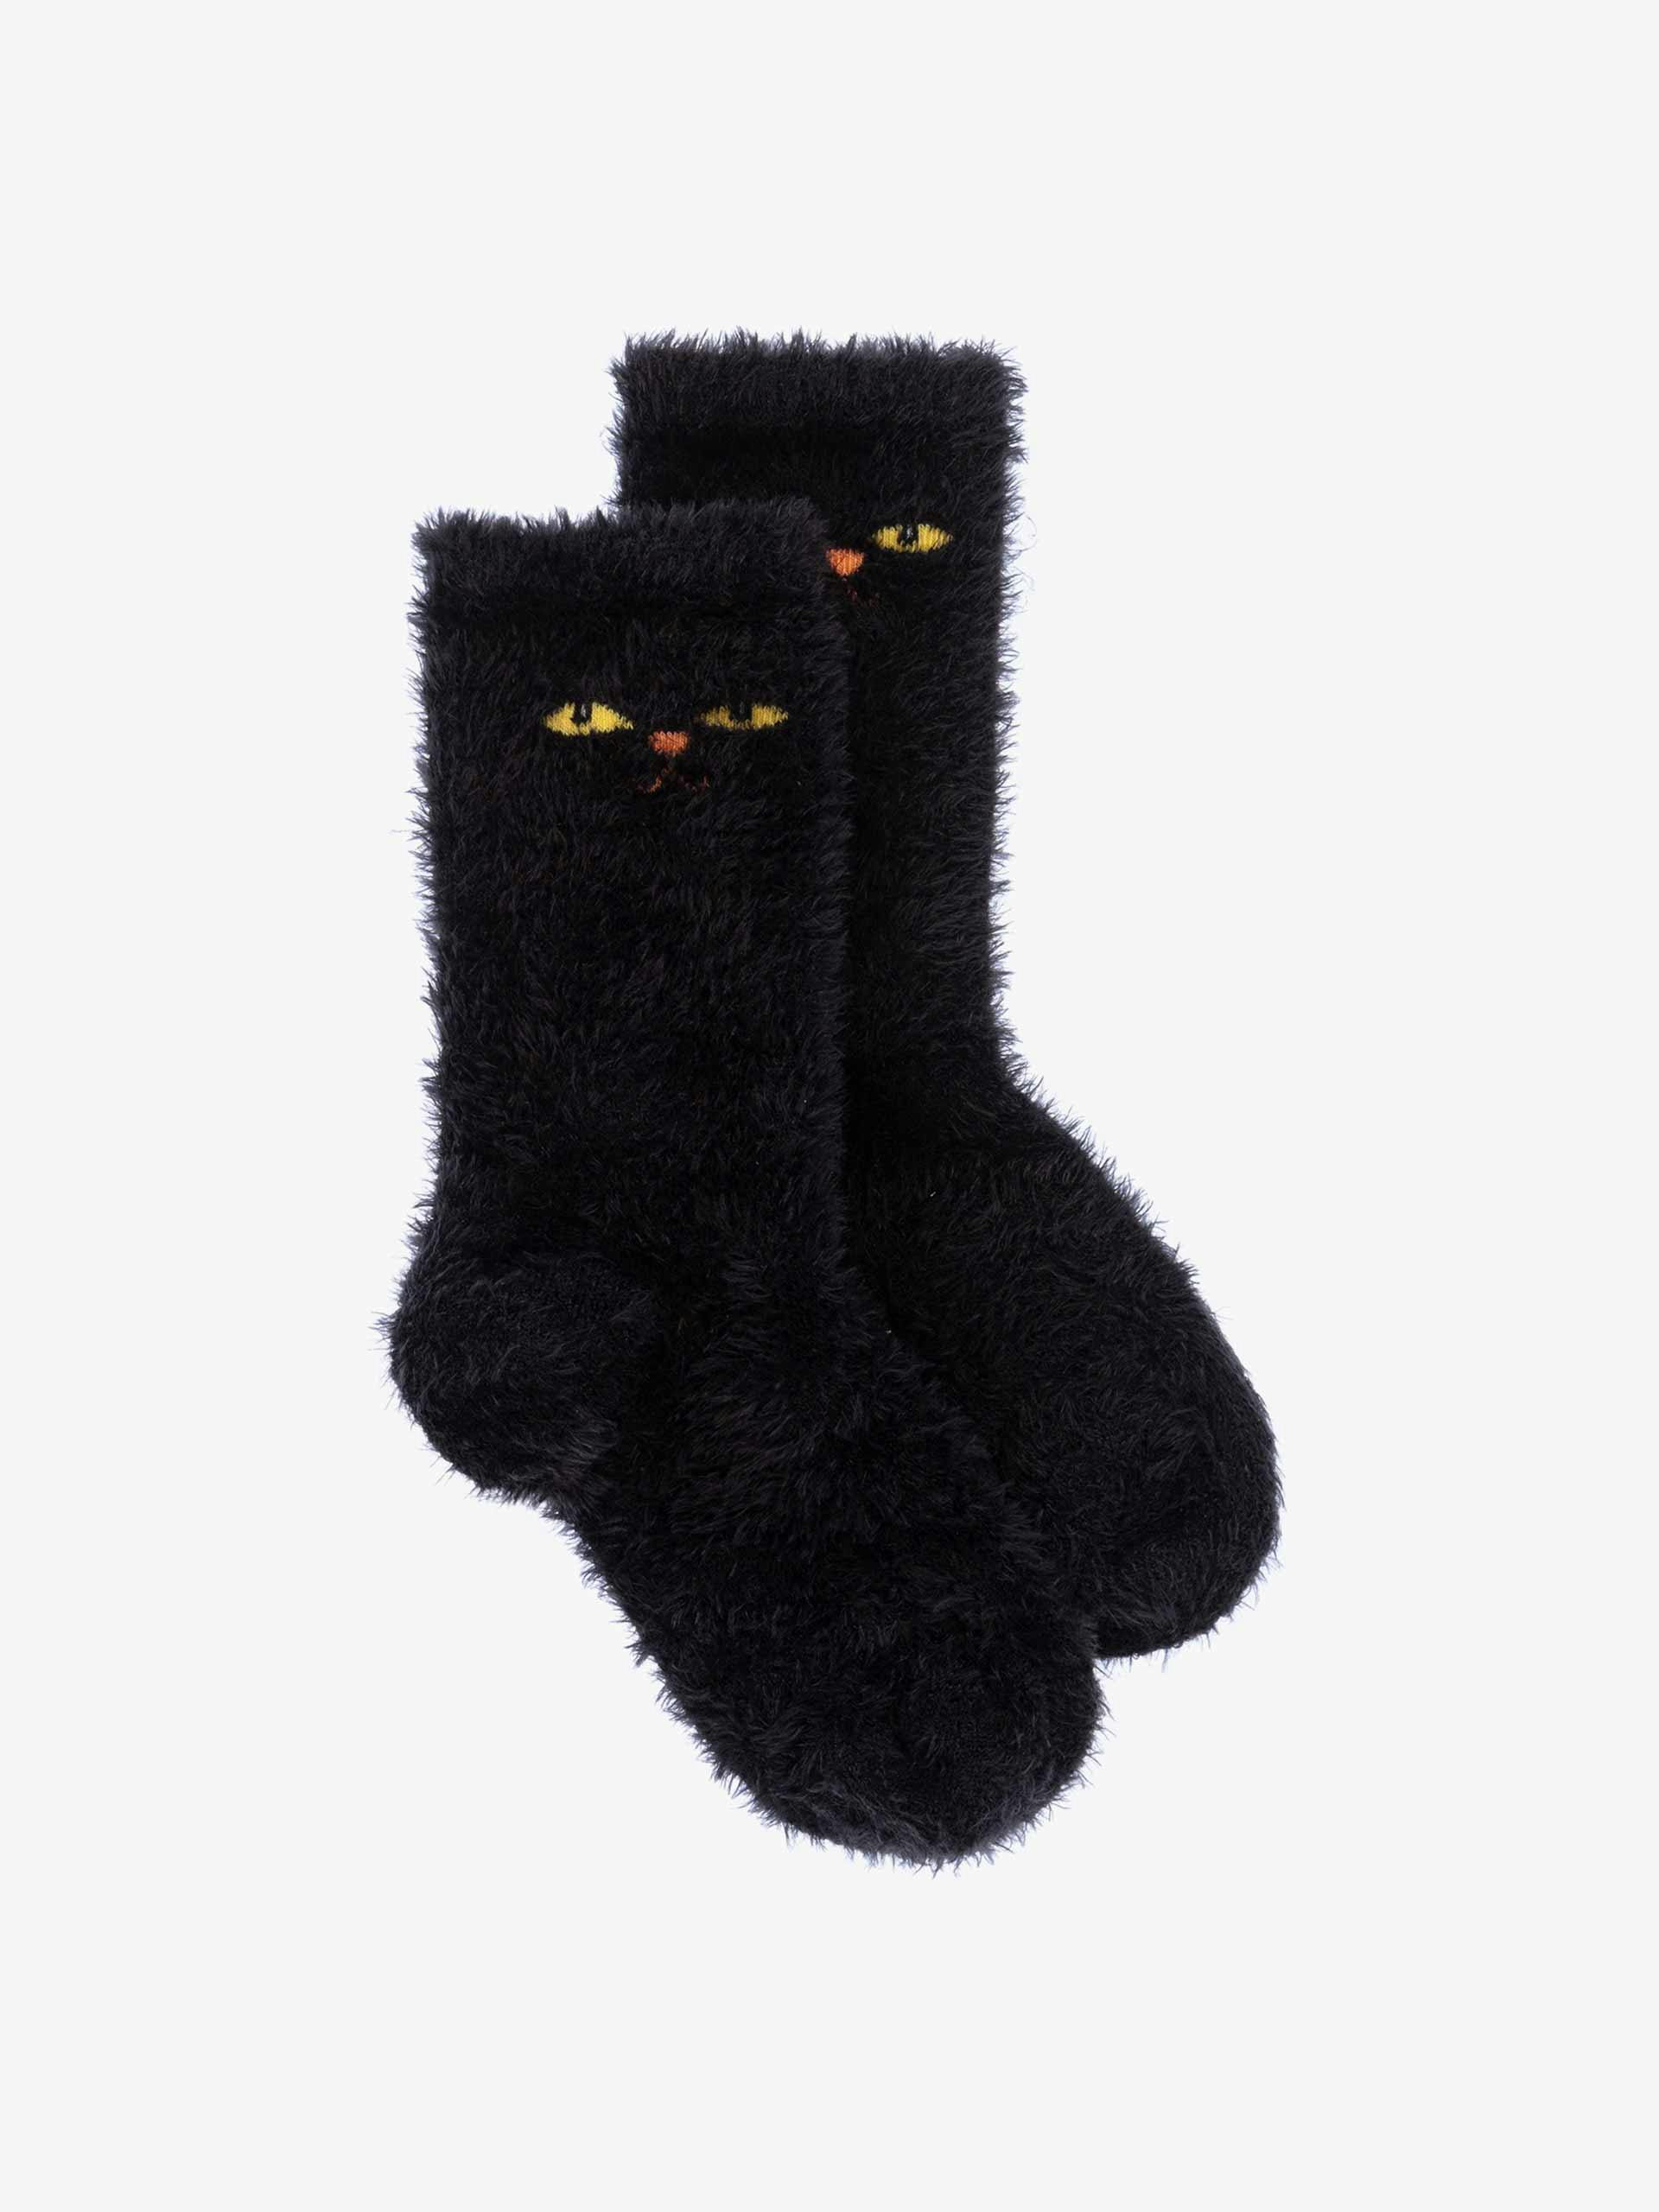 Black fluffy Chef Cat socks